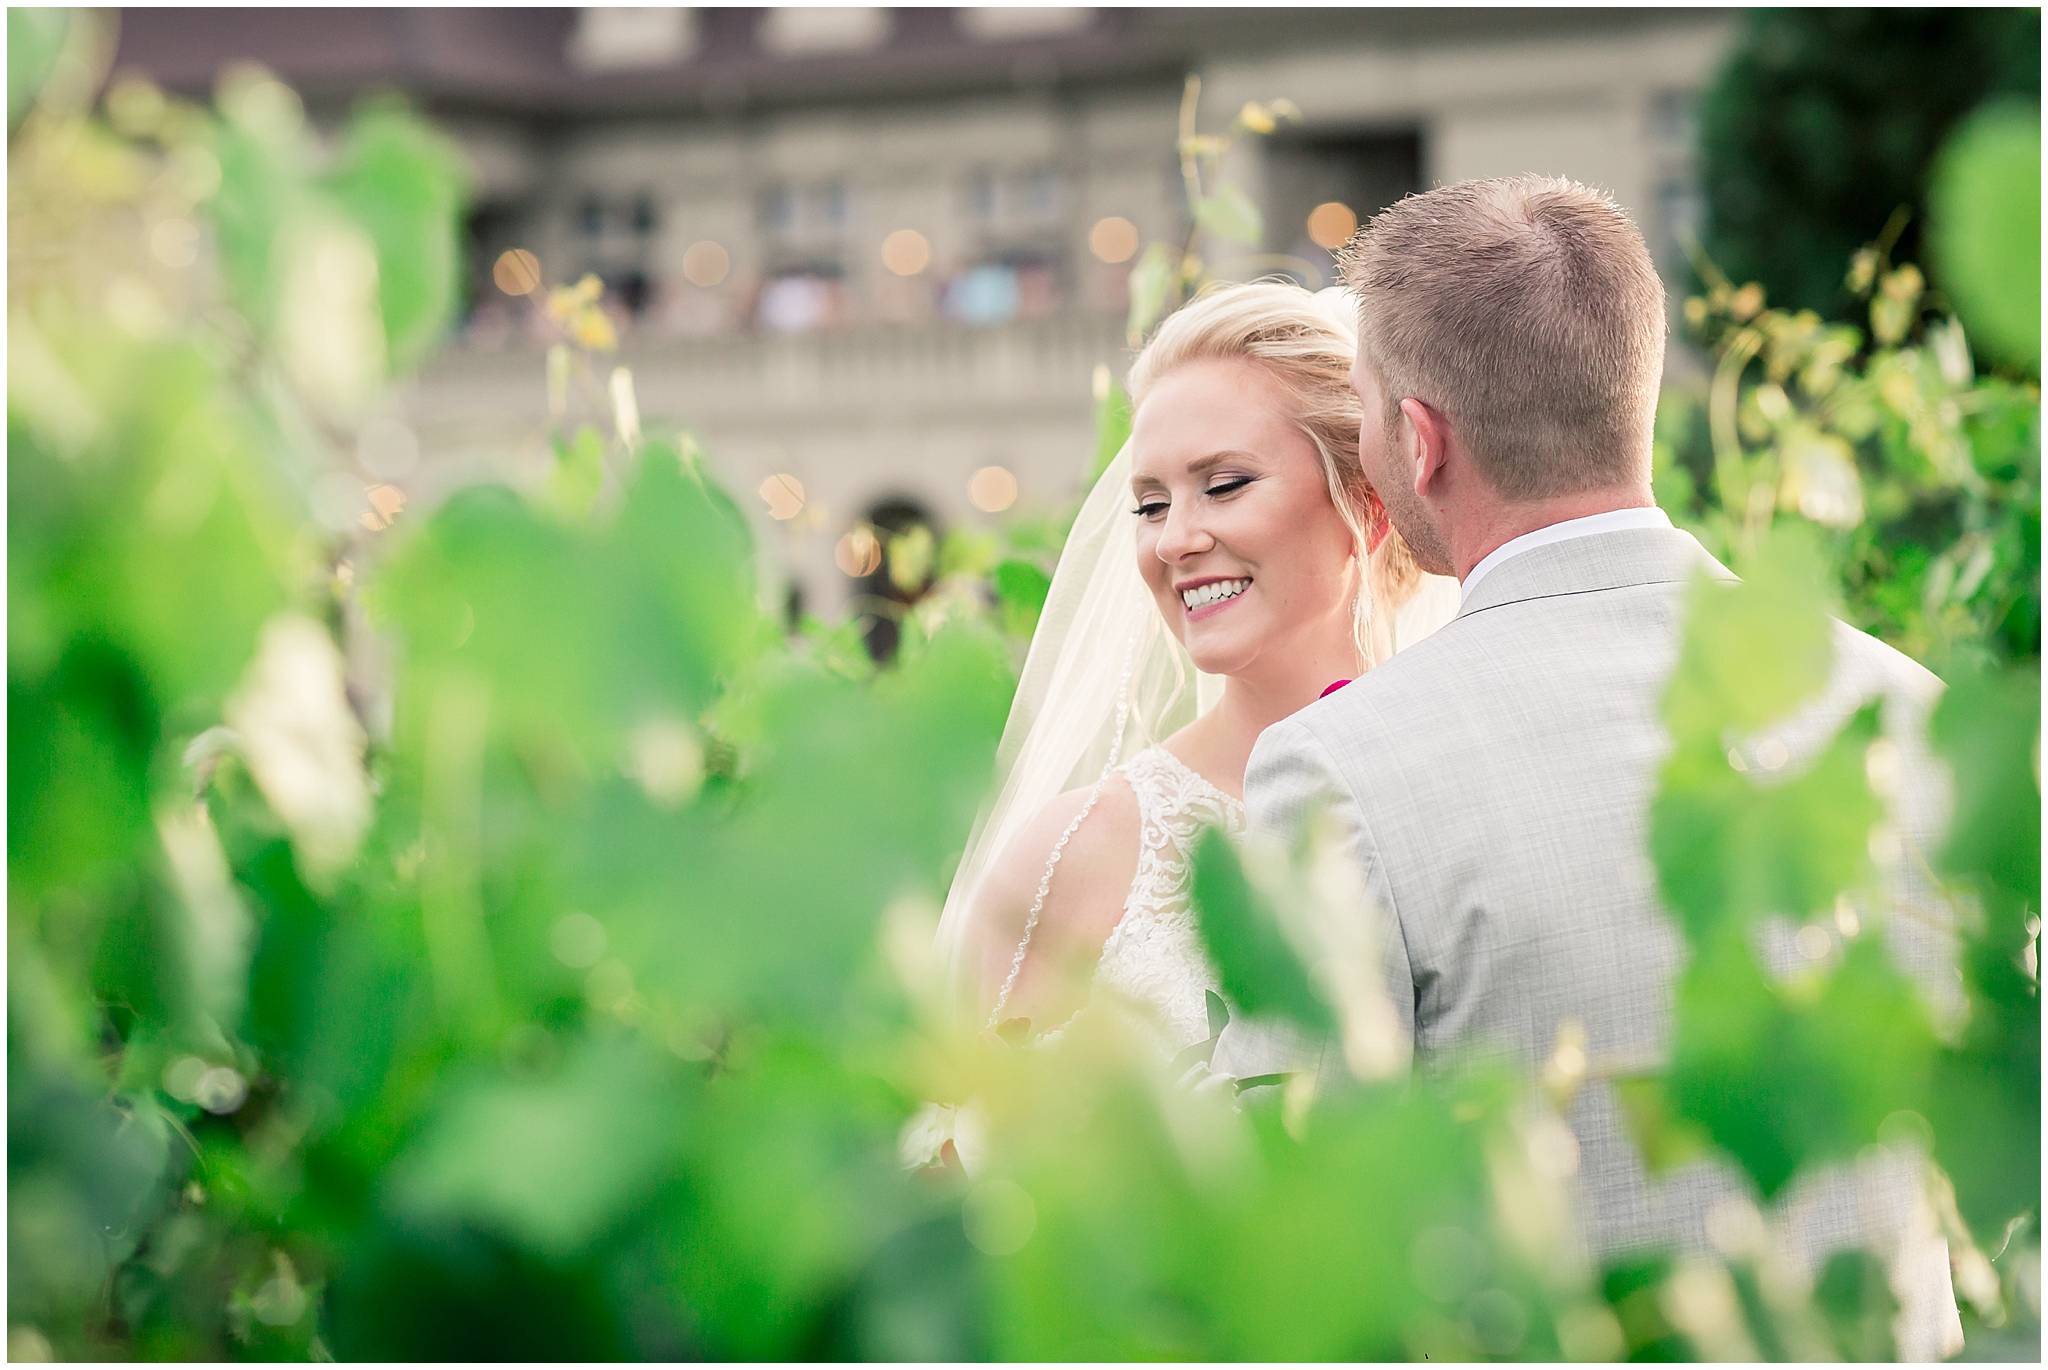 Chateau Elan Winery Resort Wedding Pictures Best wedding photographers braselton